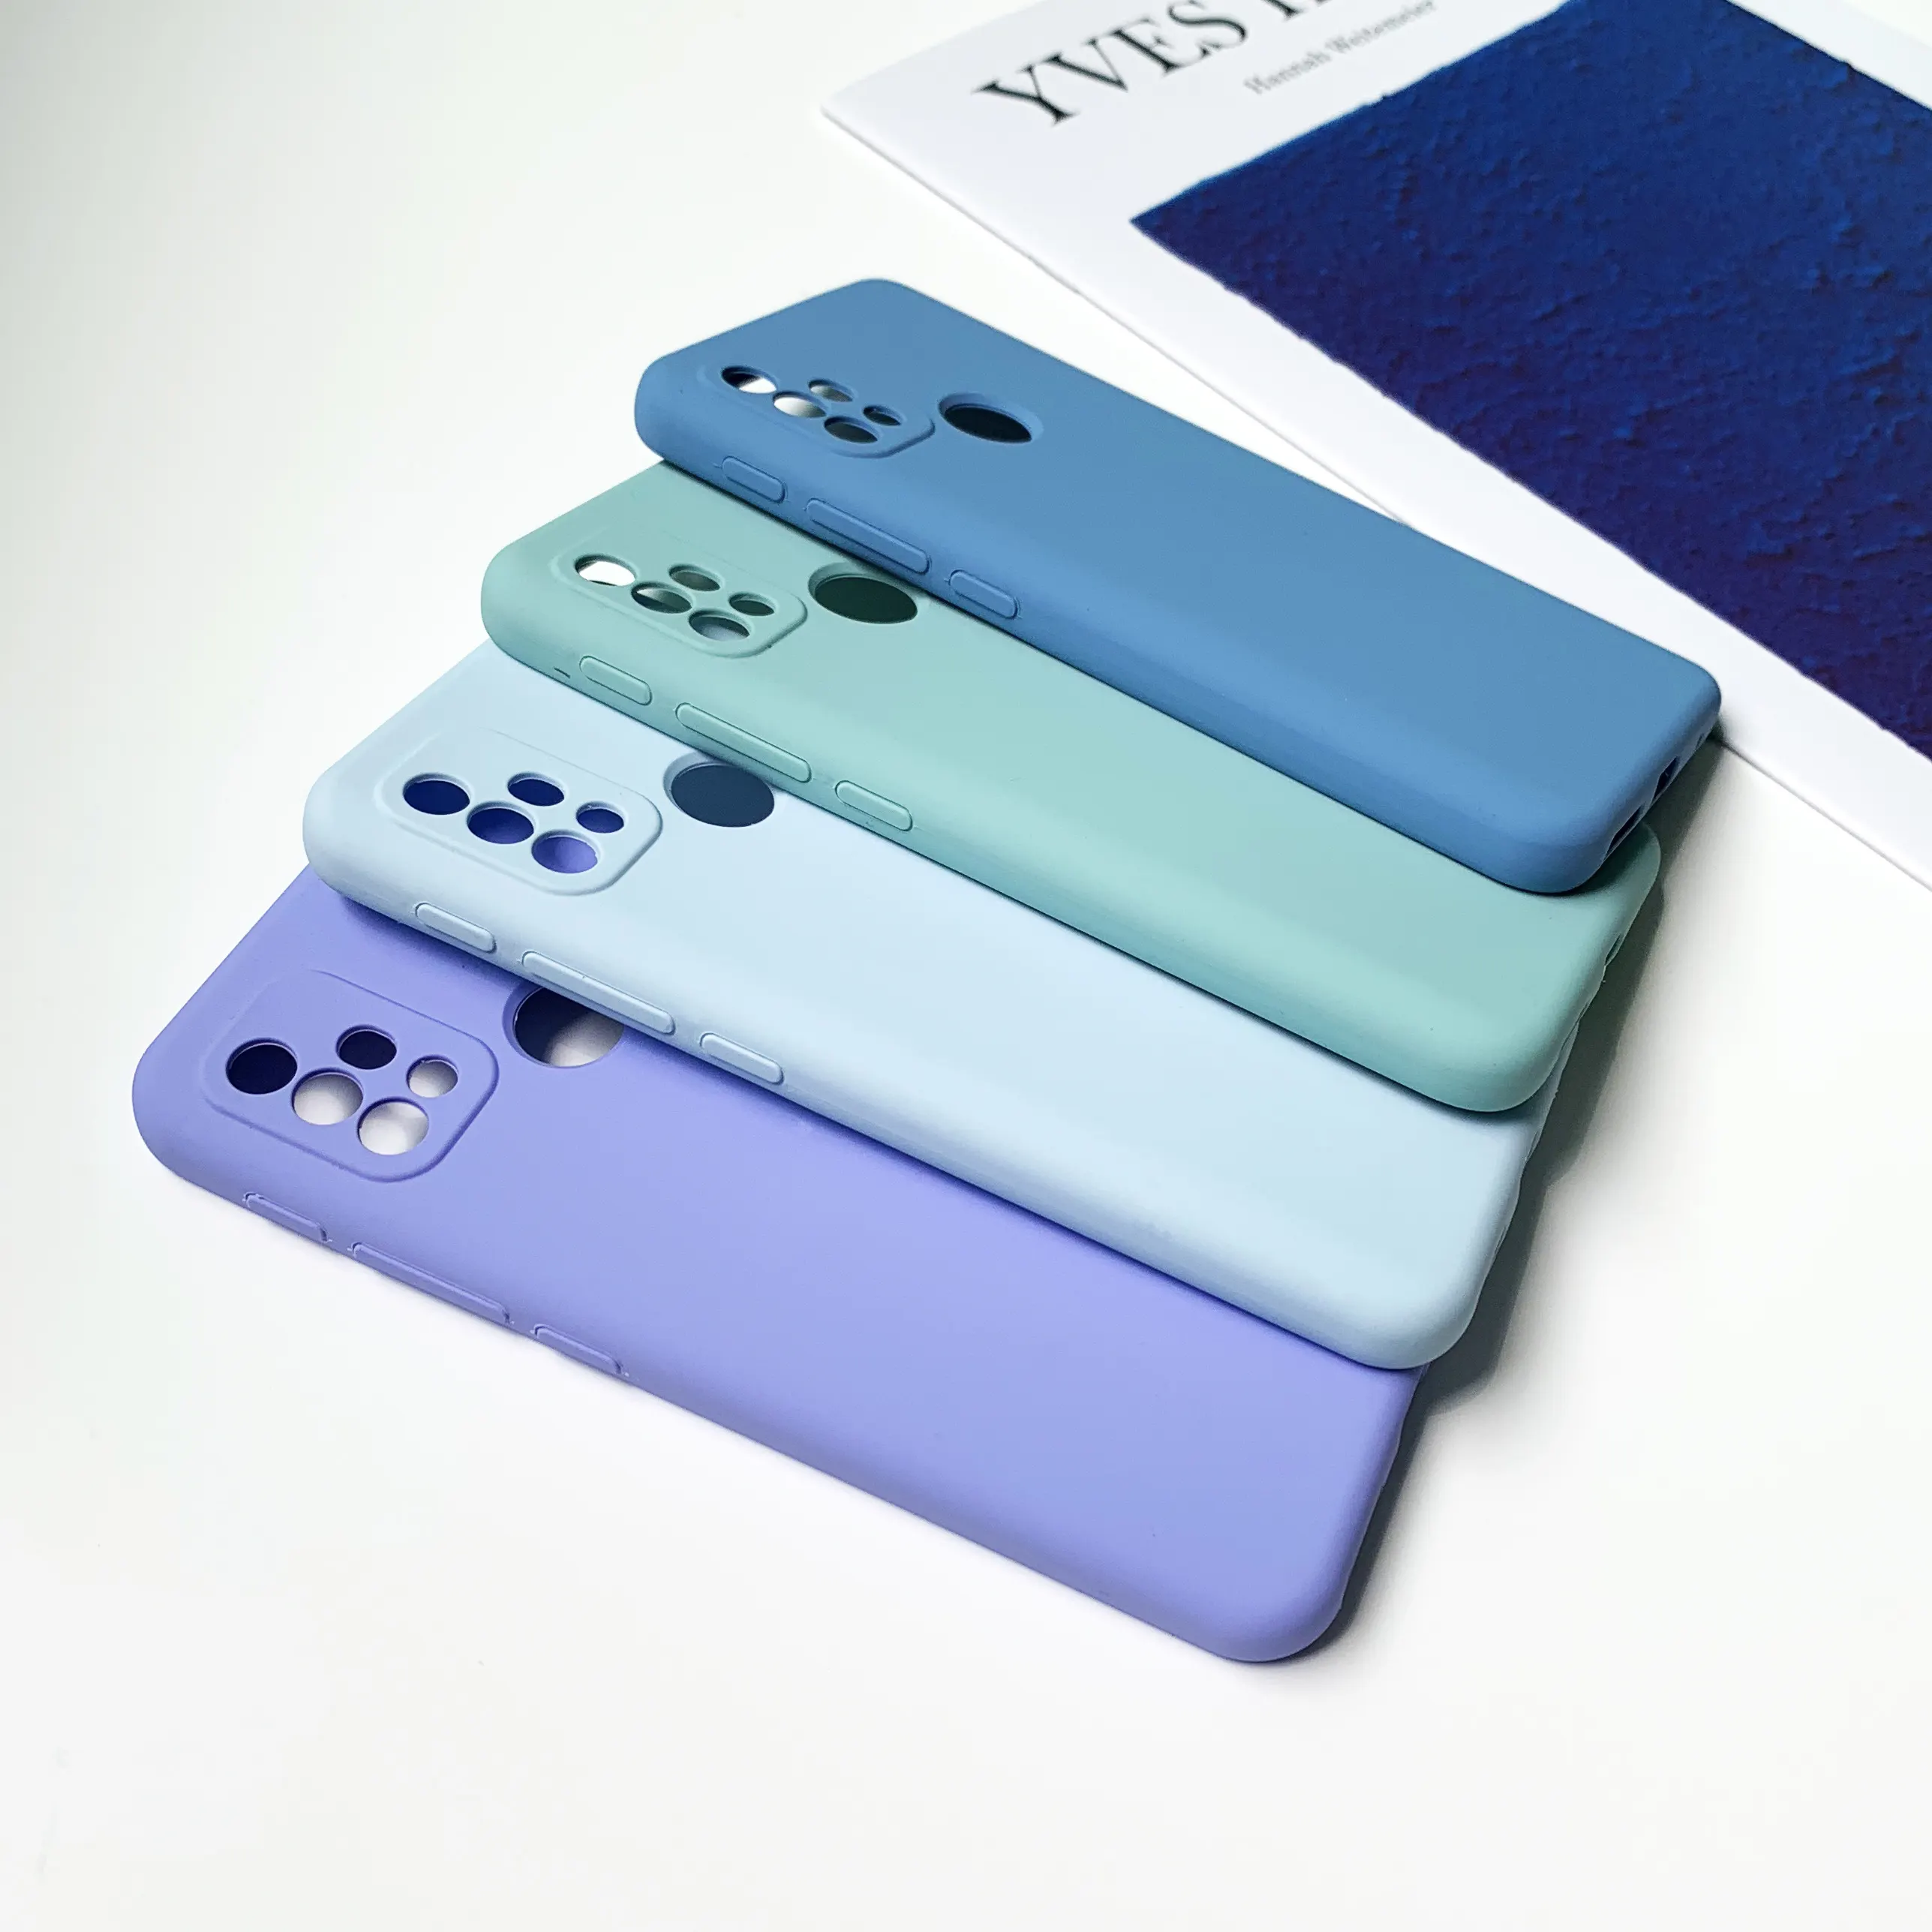 Honatop Shockproof Cover For Moto G Play 2021 Case Original Quality Genuine Liquid Silicone Microfiber inside Phone case